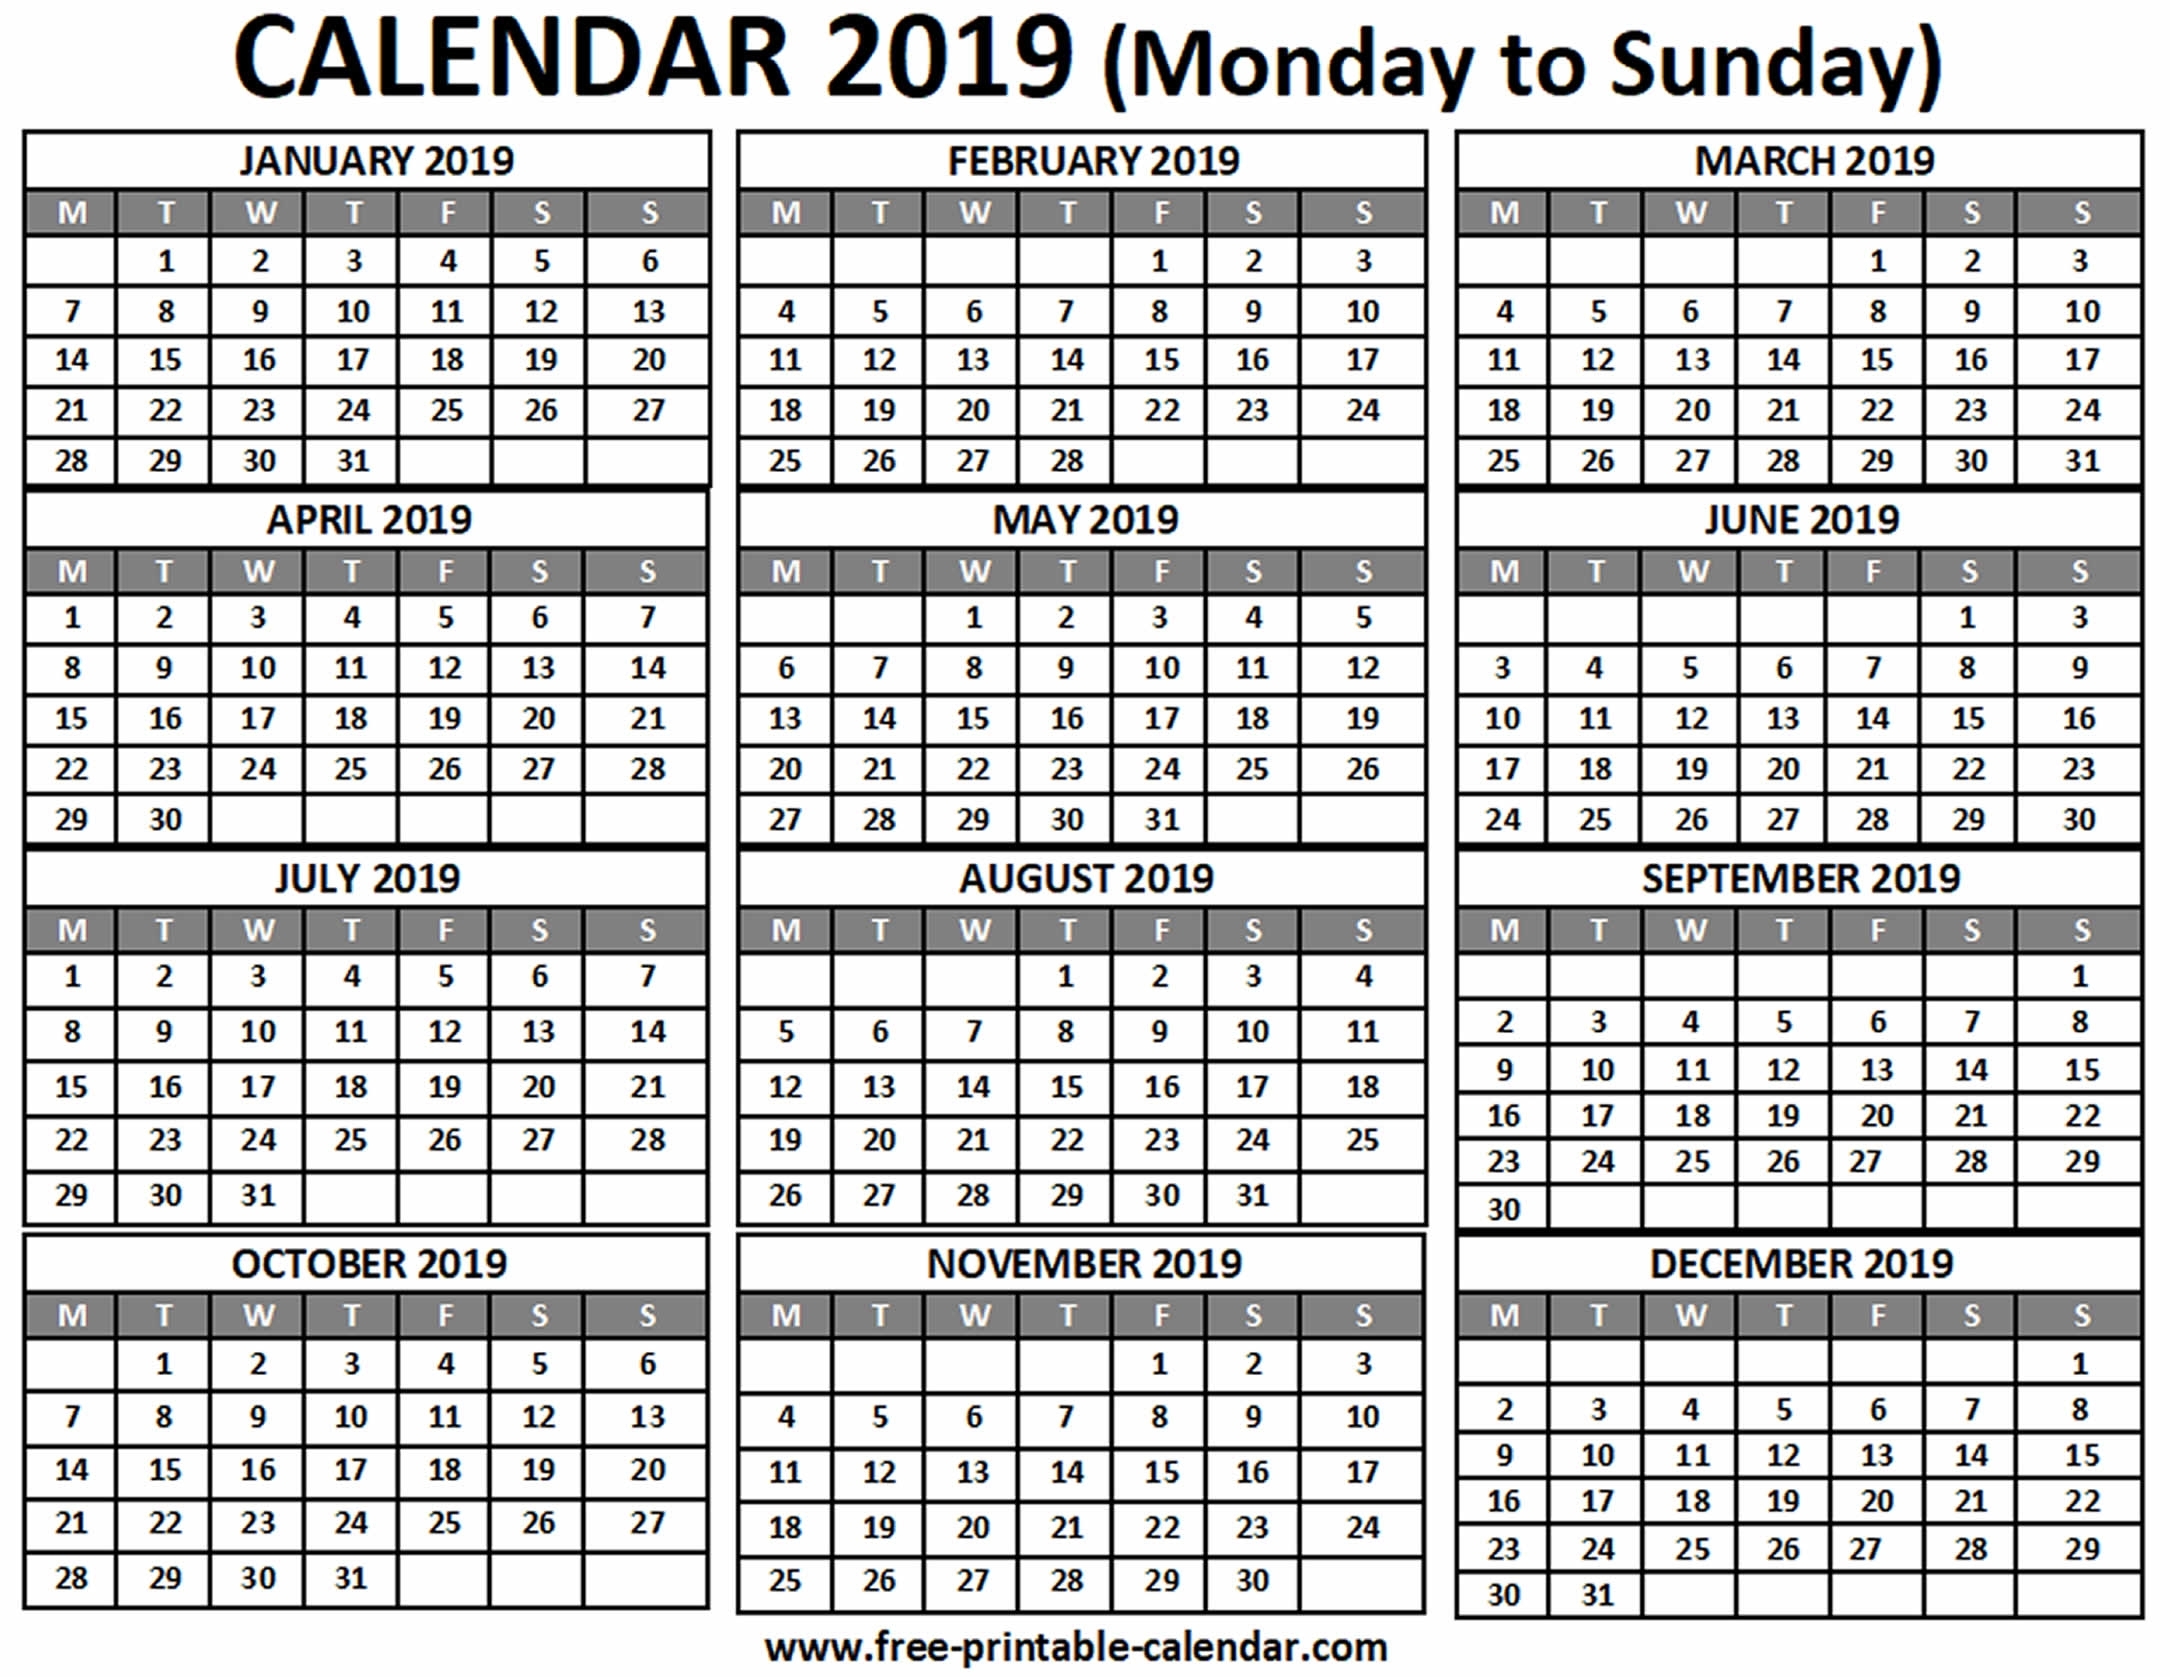 2019 Calendar - Free-Printable-Calendar throughout 3 Months In One Calenadar